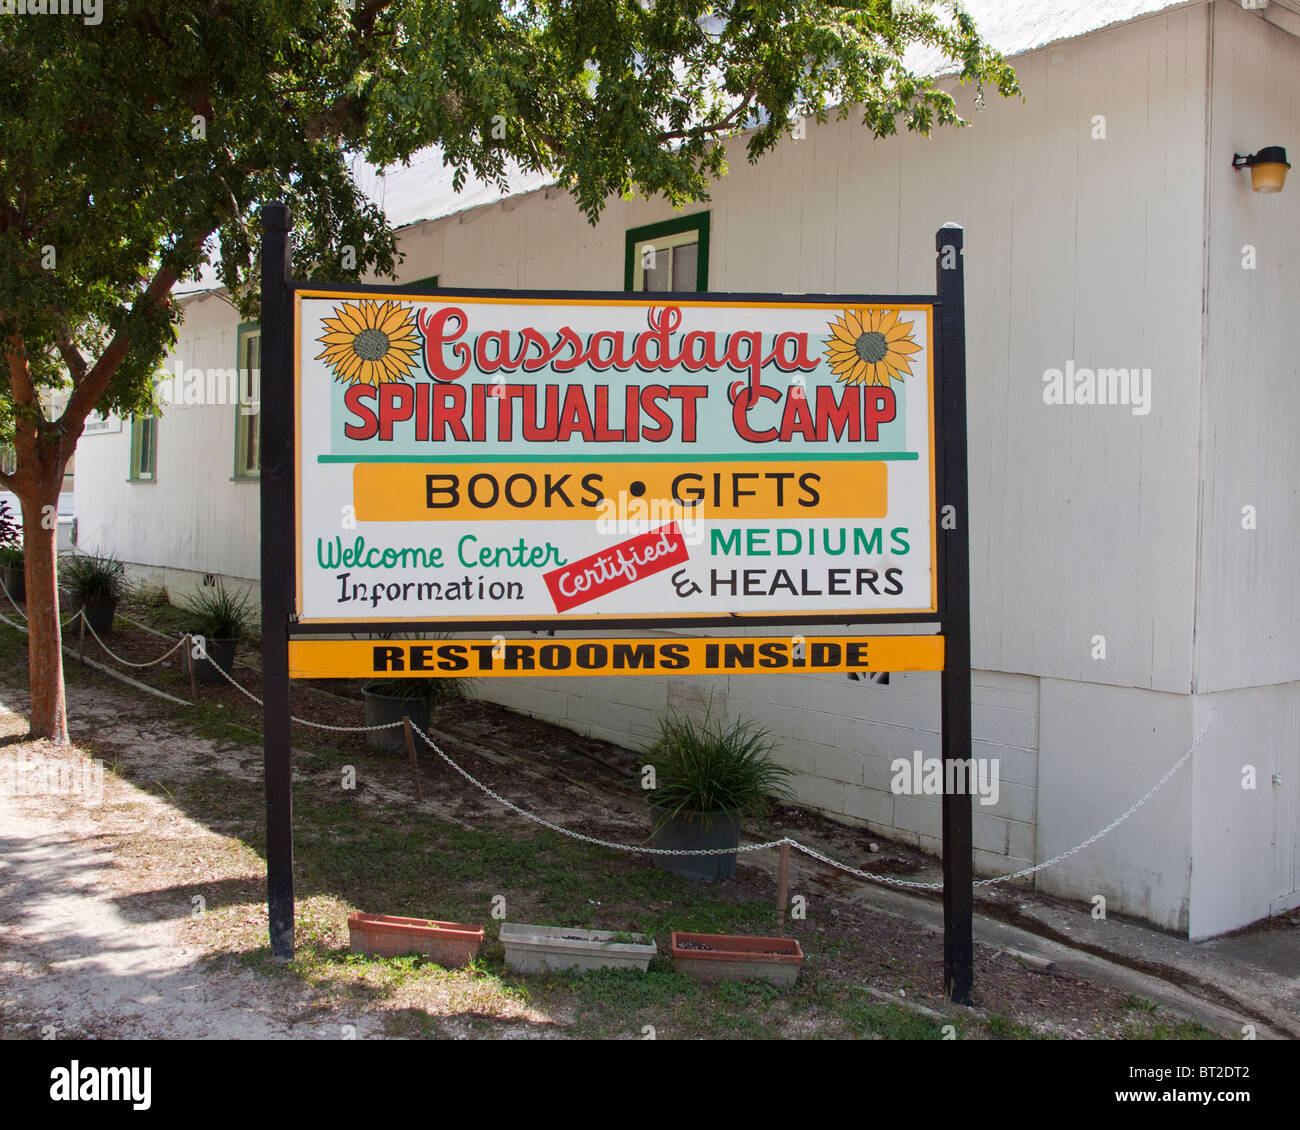 Cassadaga Spiritualist Camp in Central Florida USA Stock Photo